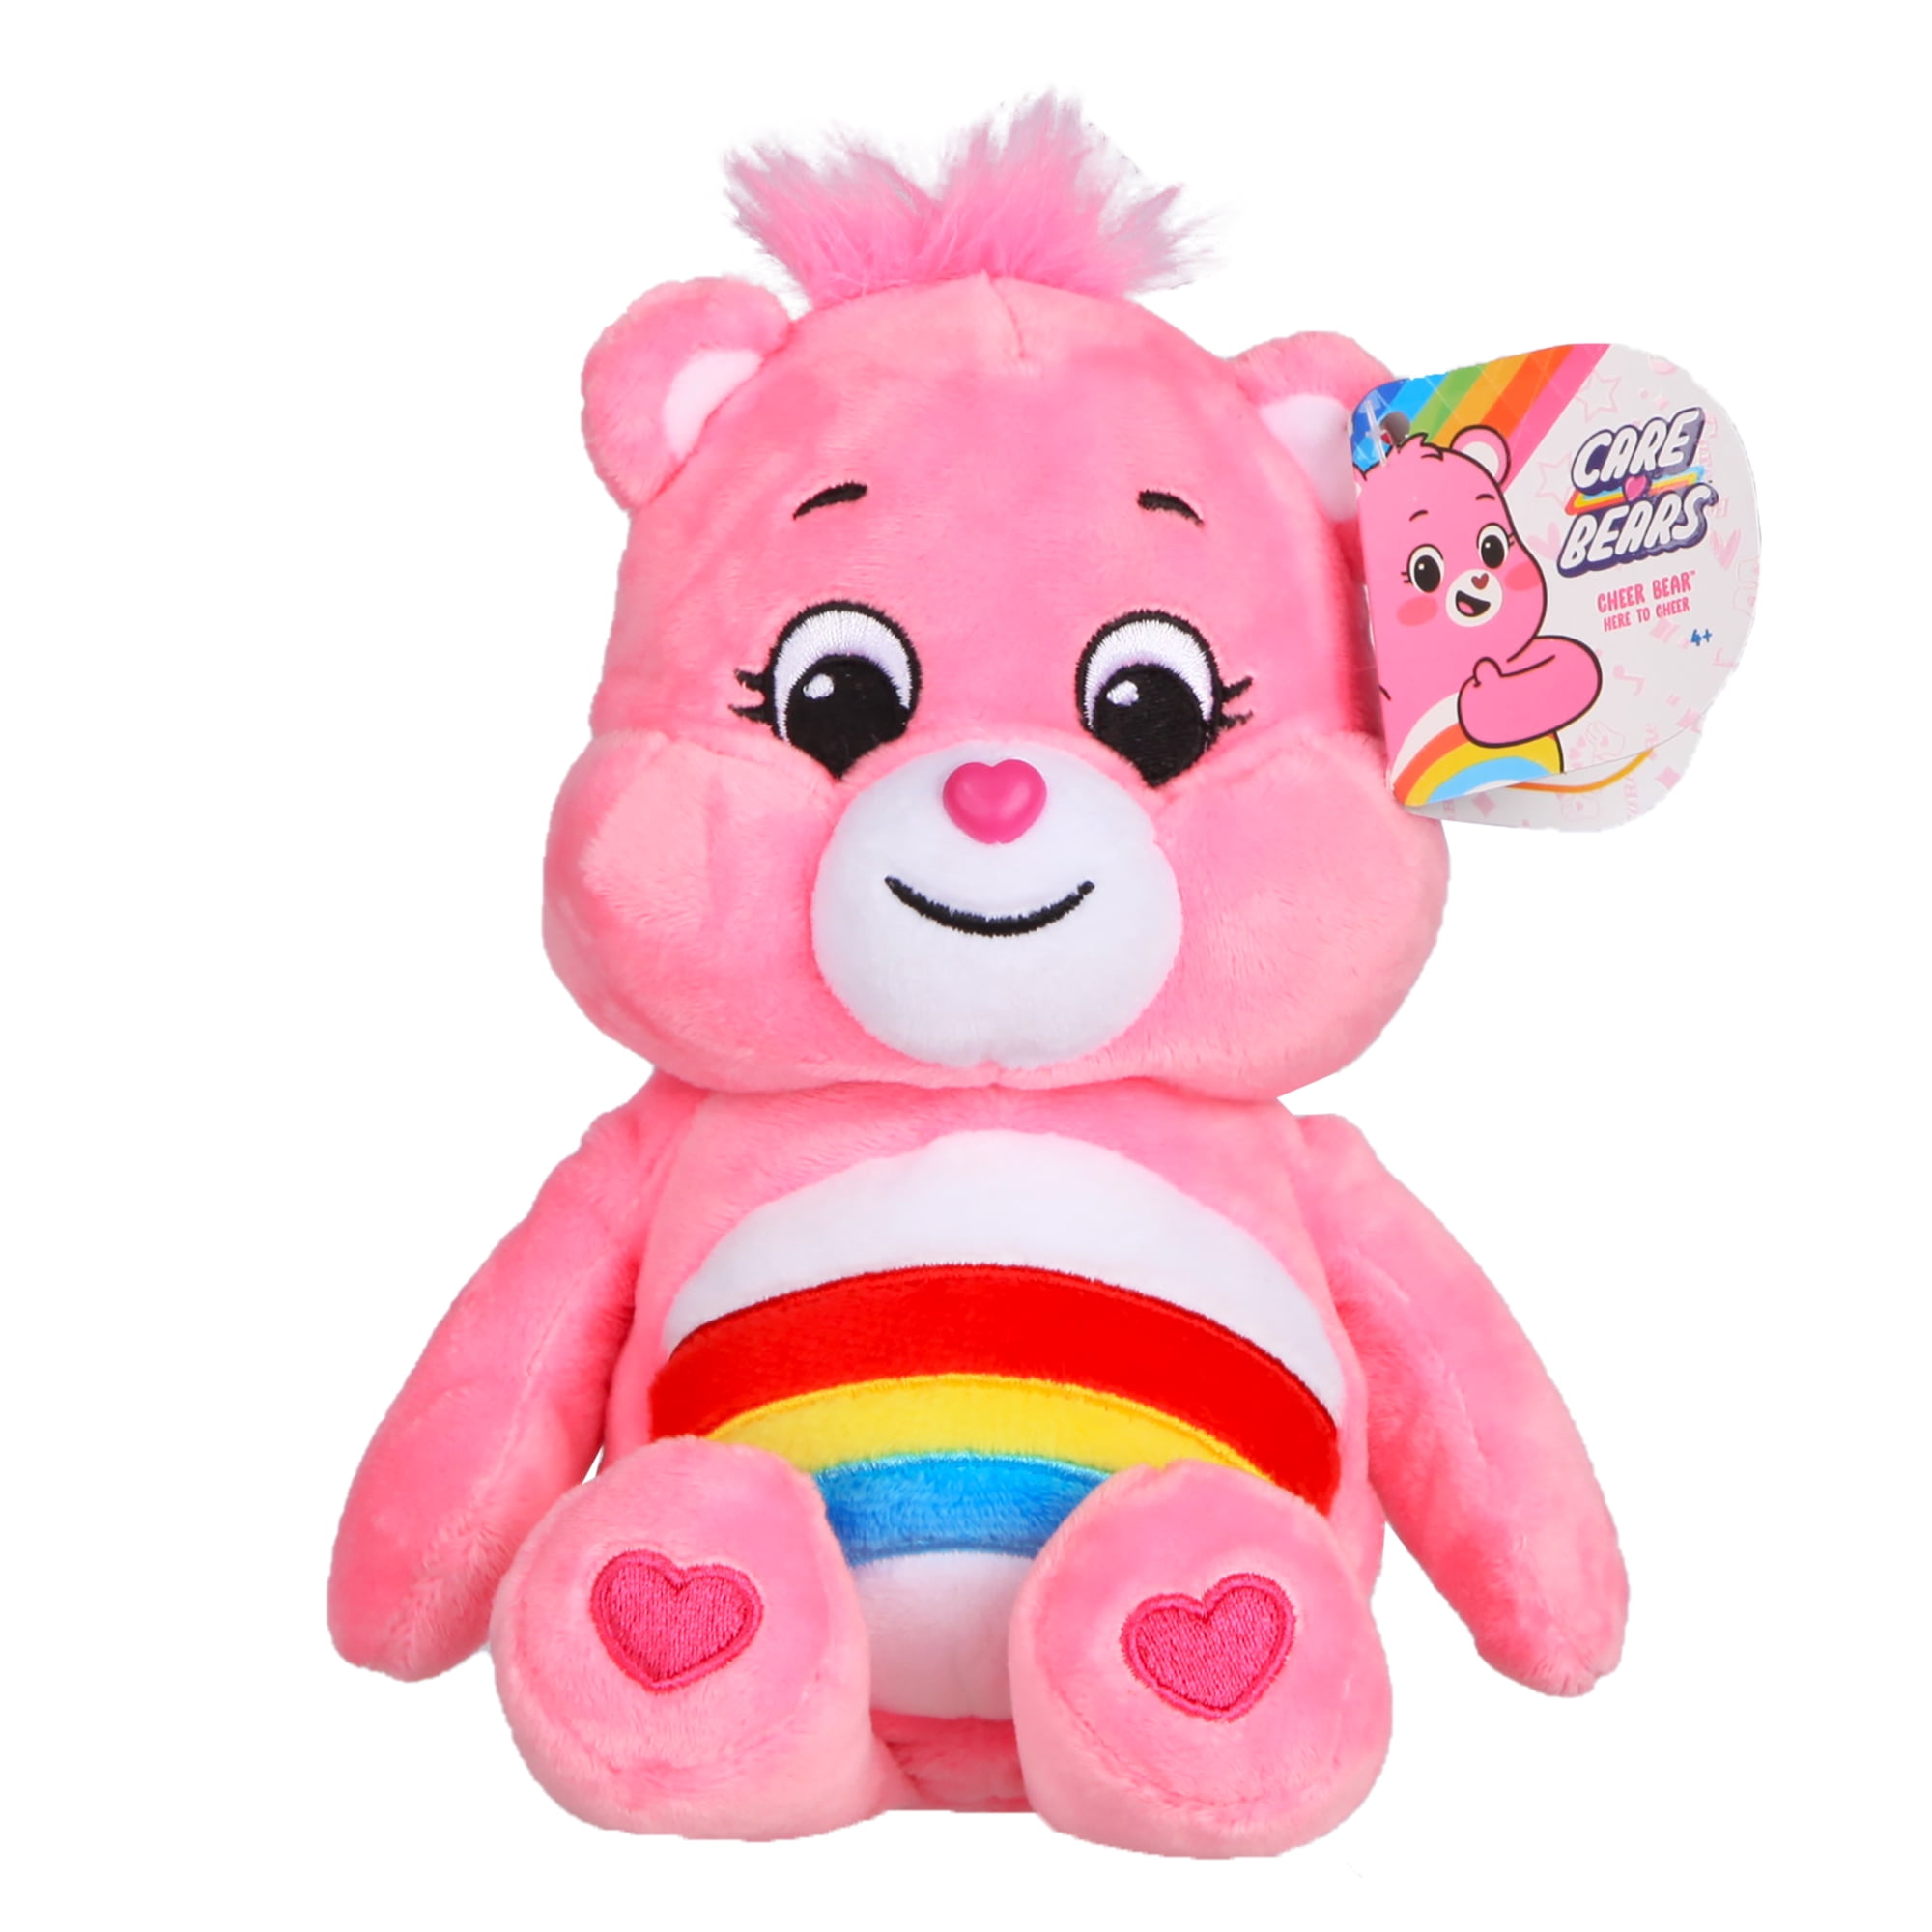 Care Bears 9 inch Bean Plush - Cheer Bear - Soft Huggable Material!